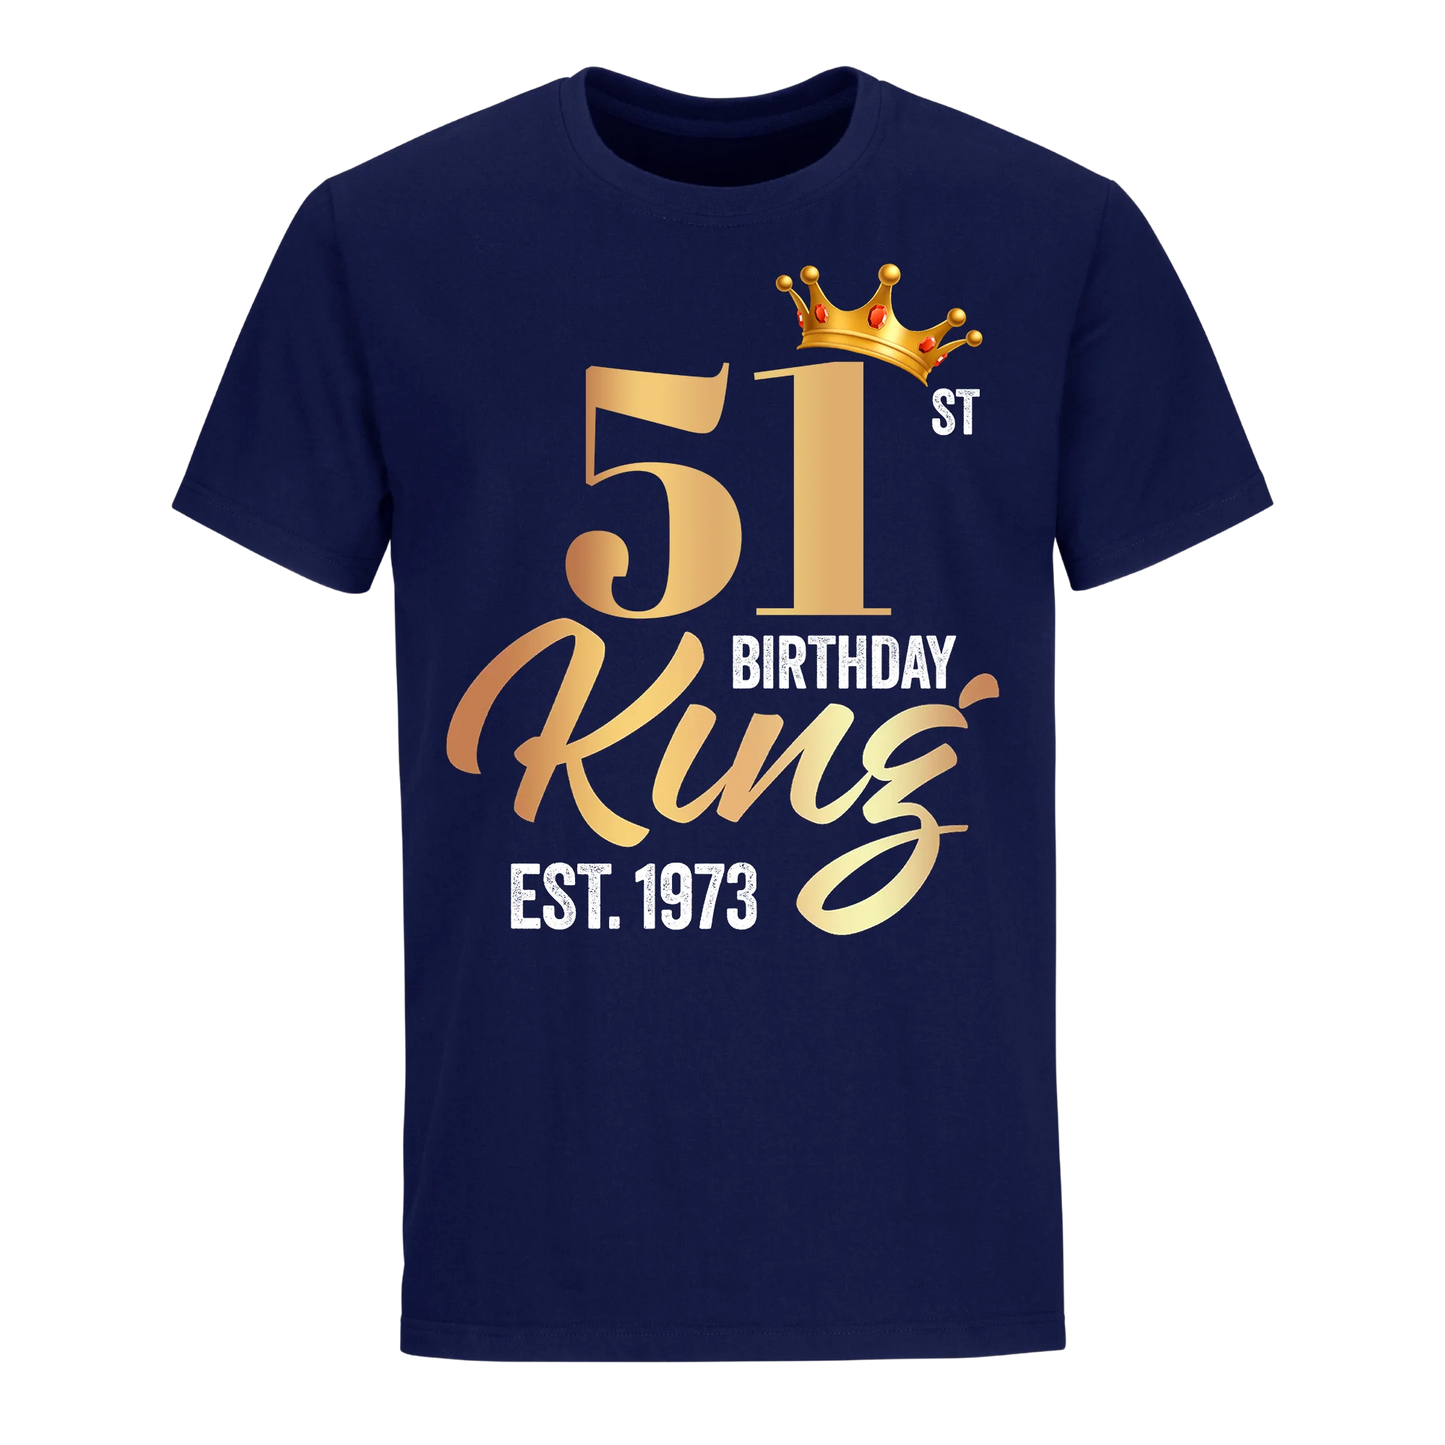 51ST KING BIRTHDAY EST. 1973 UNISEX SHIRT